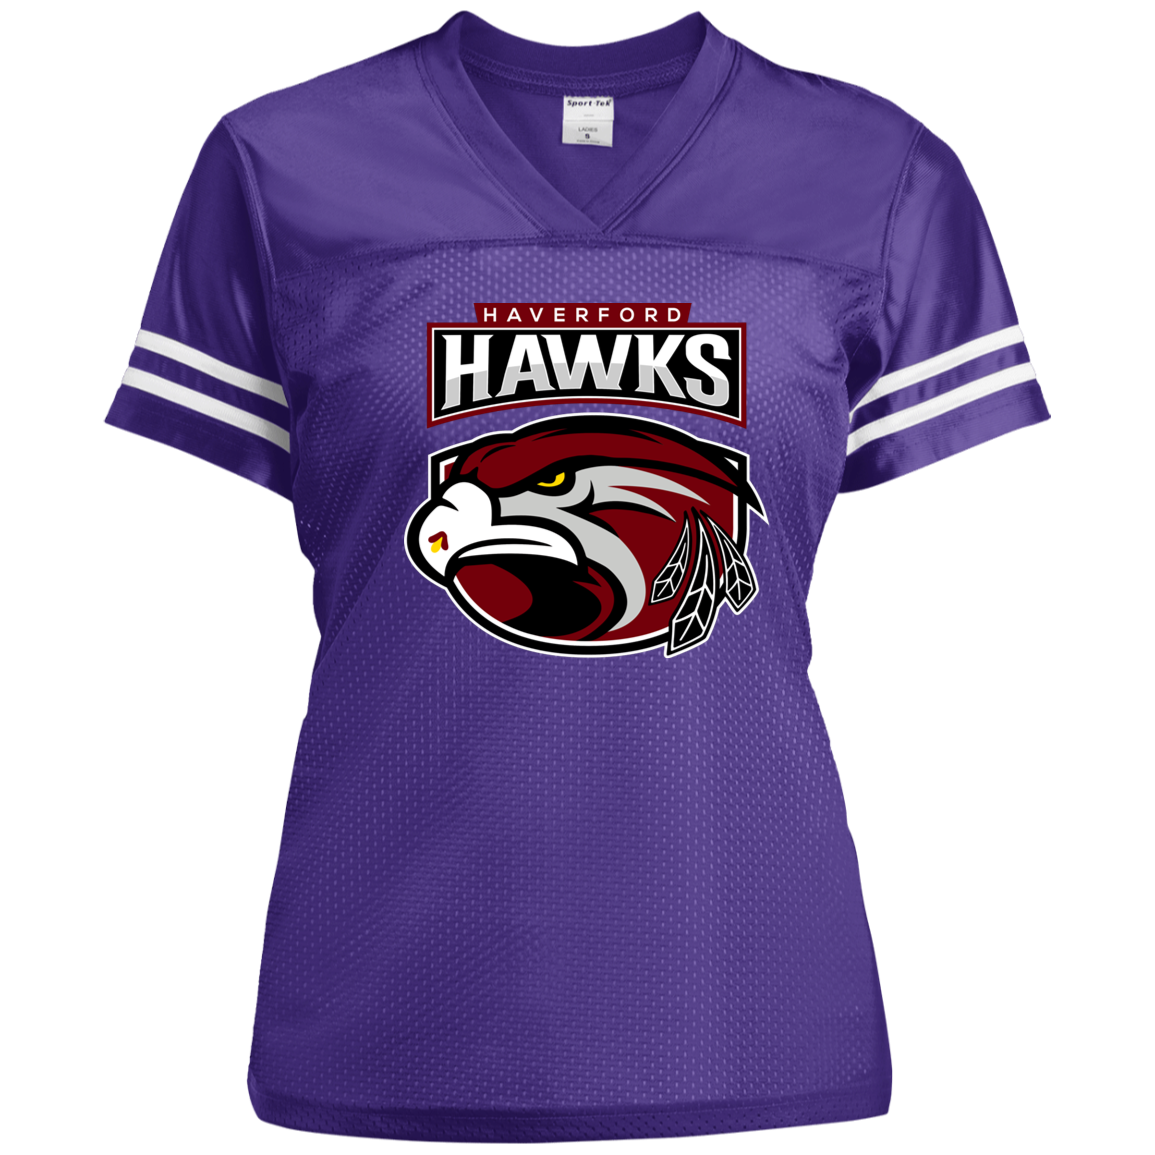 Hawks Ladies' Replica Jersey